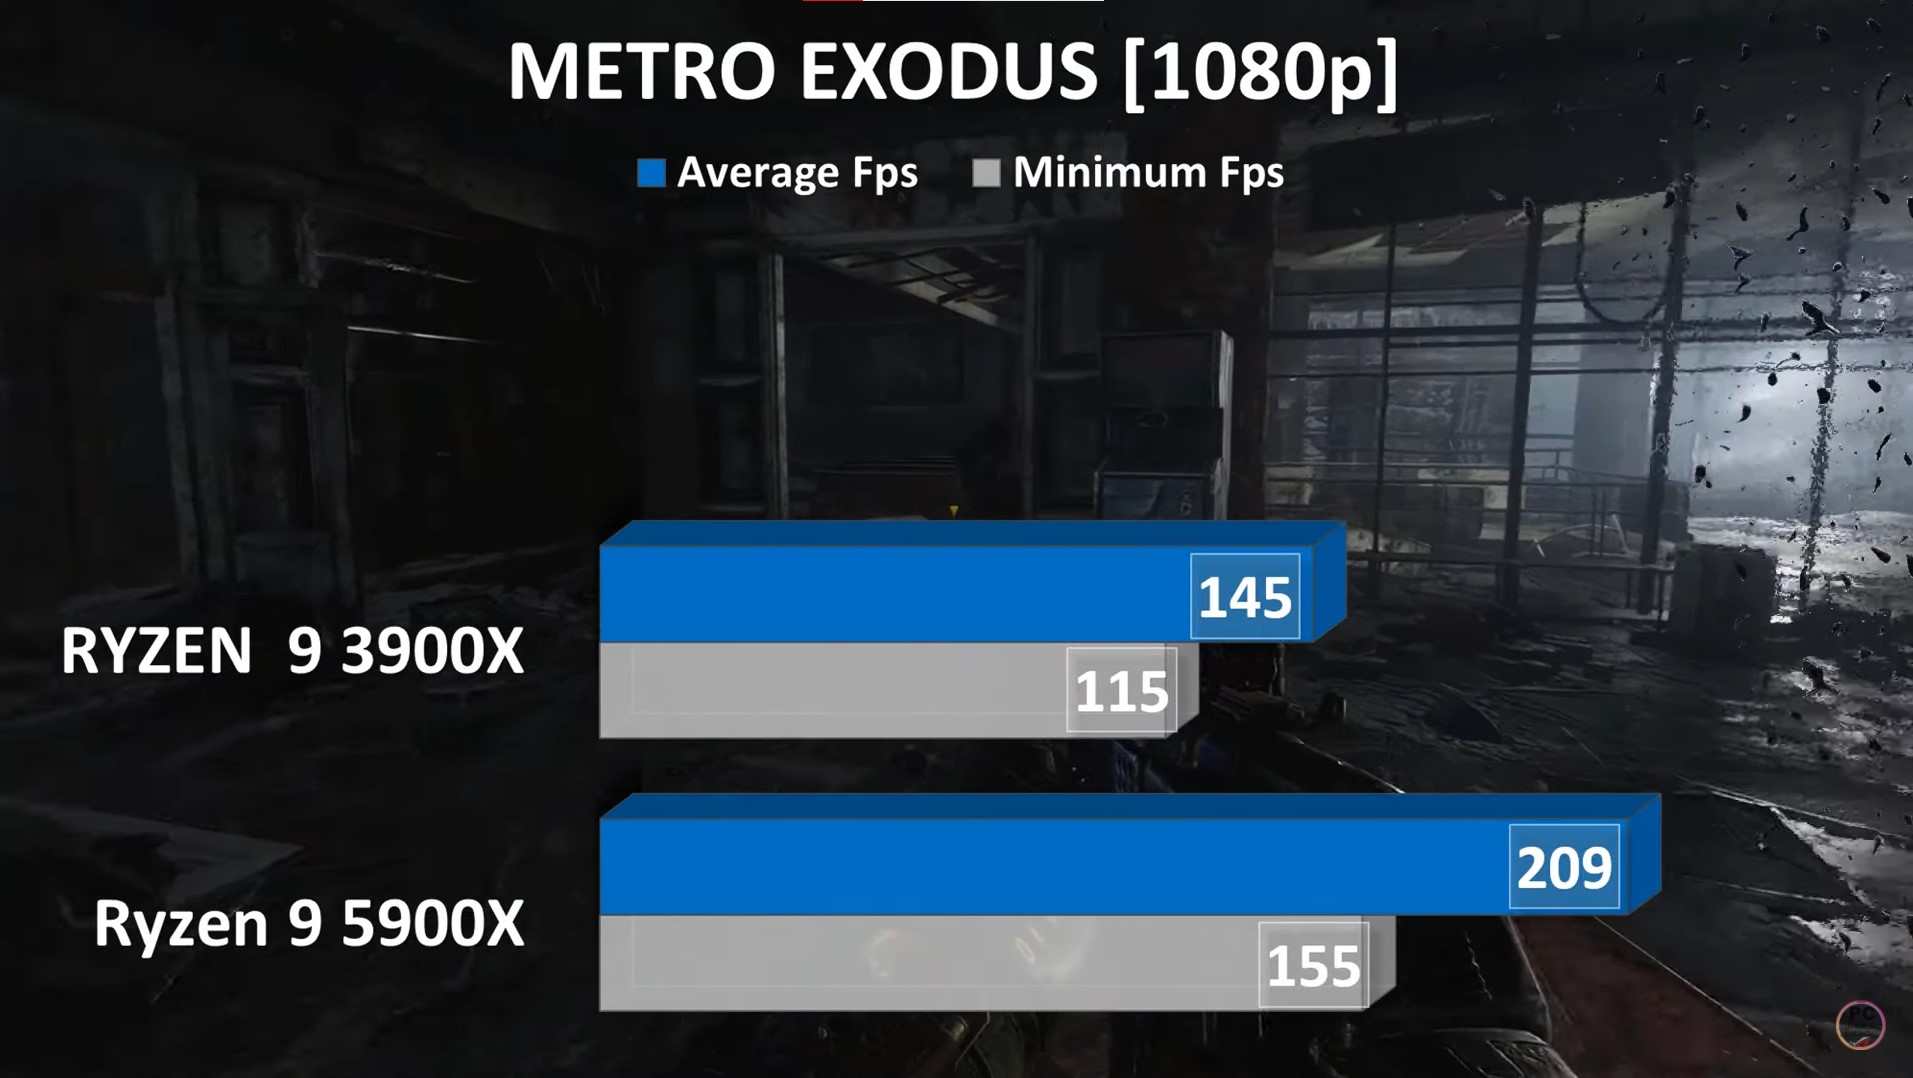 Comparing 3900x vs 5900x performance with Metro Exodus.